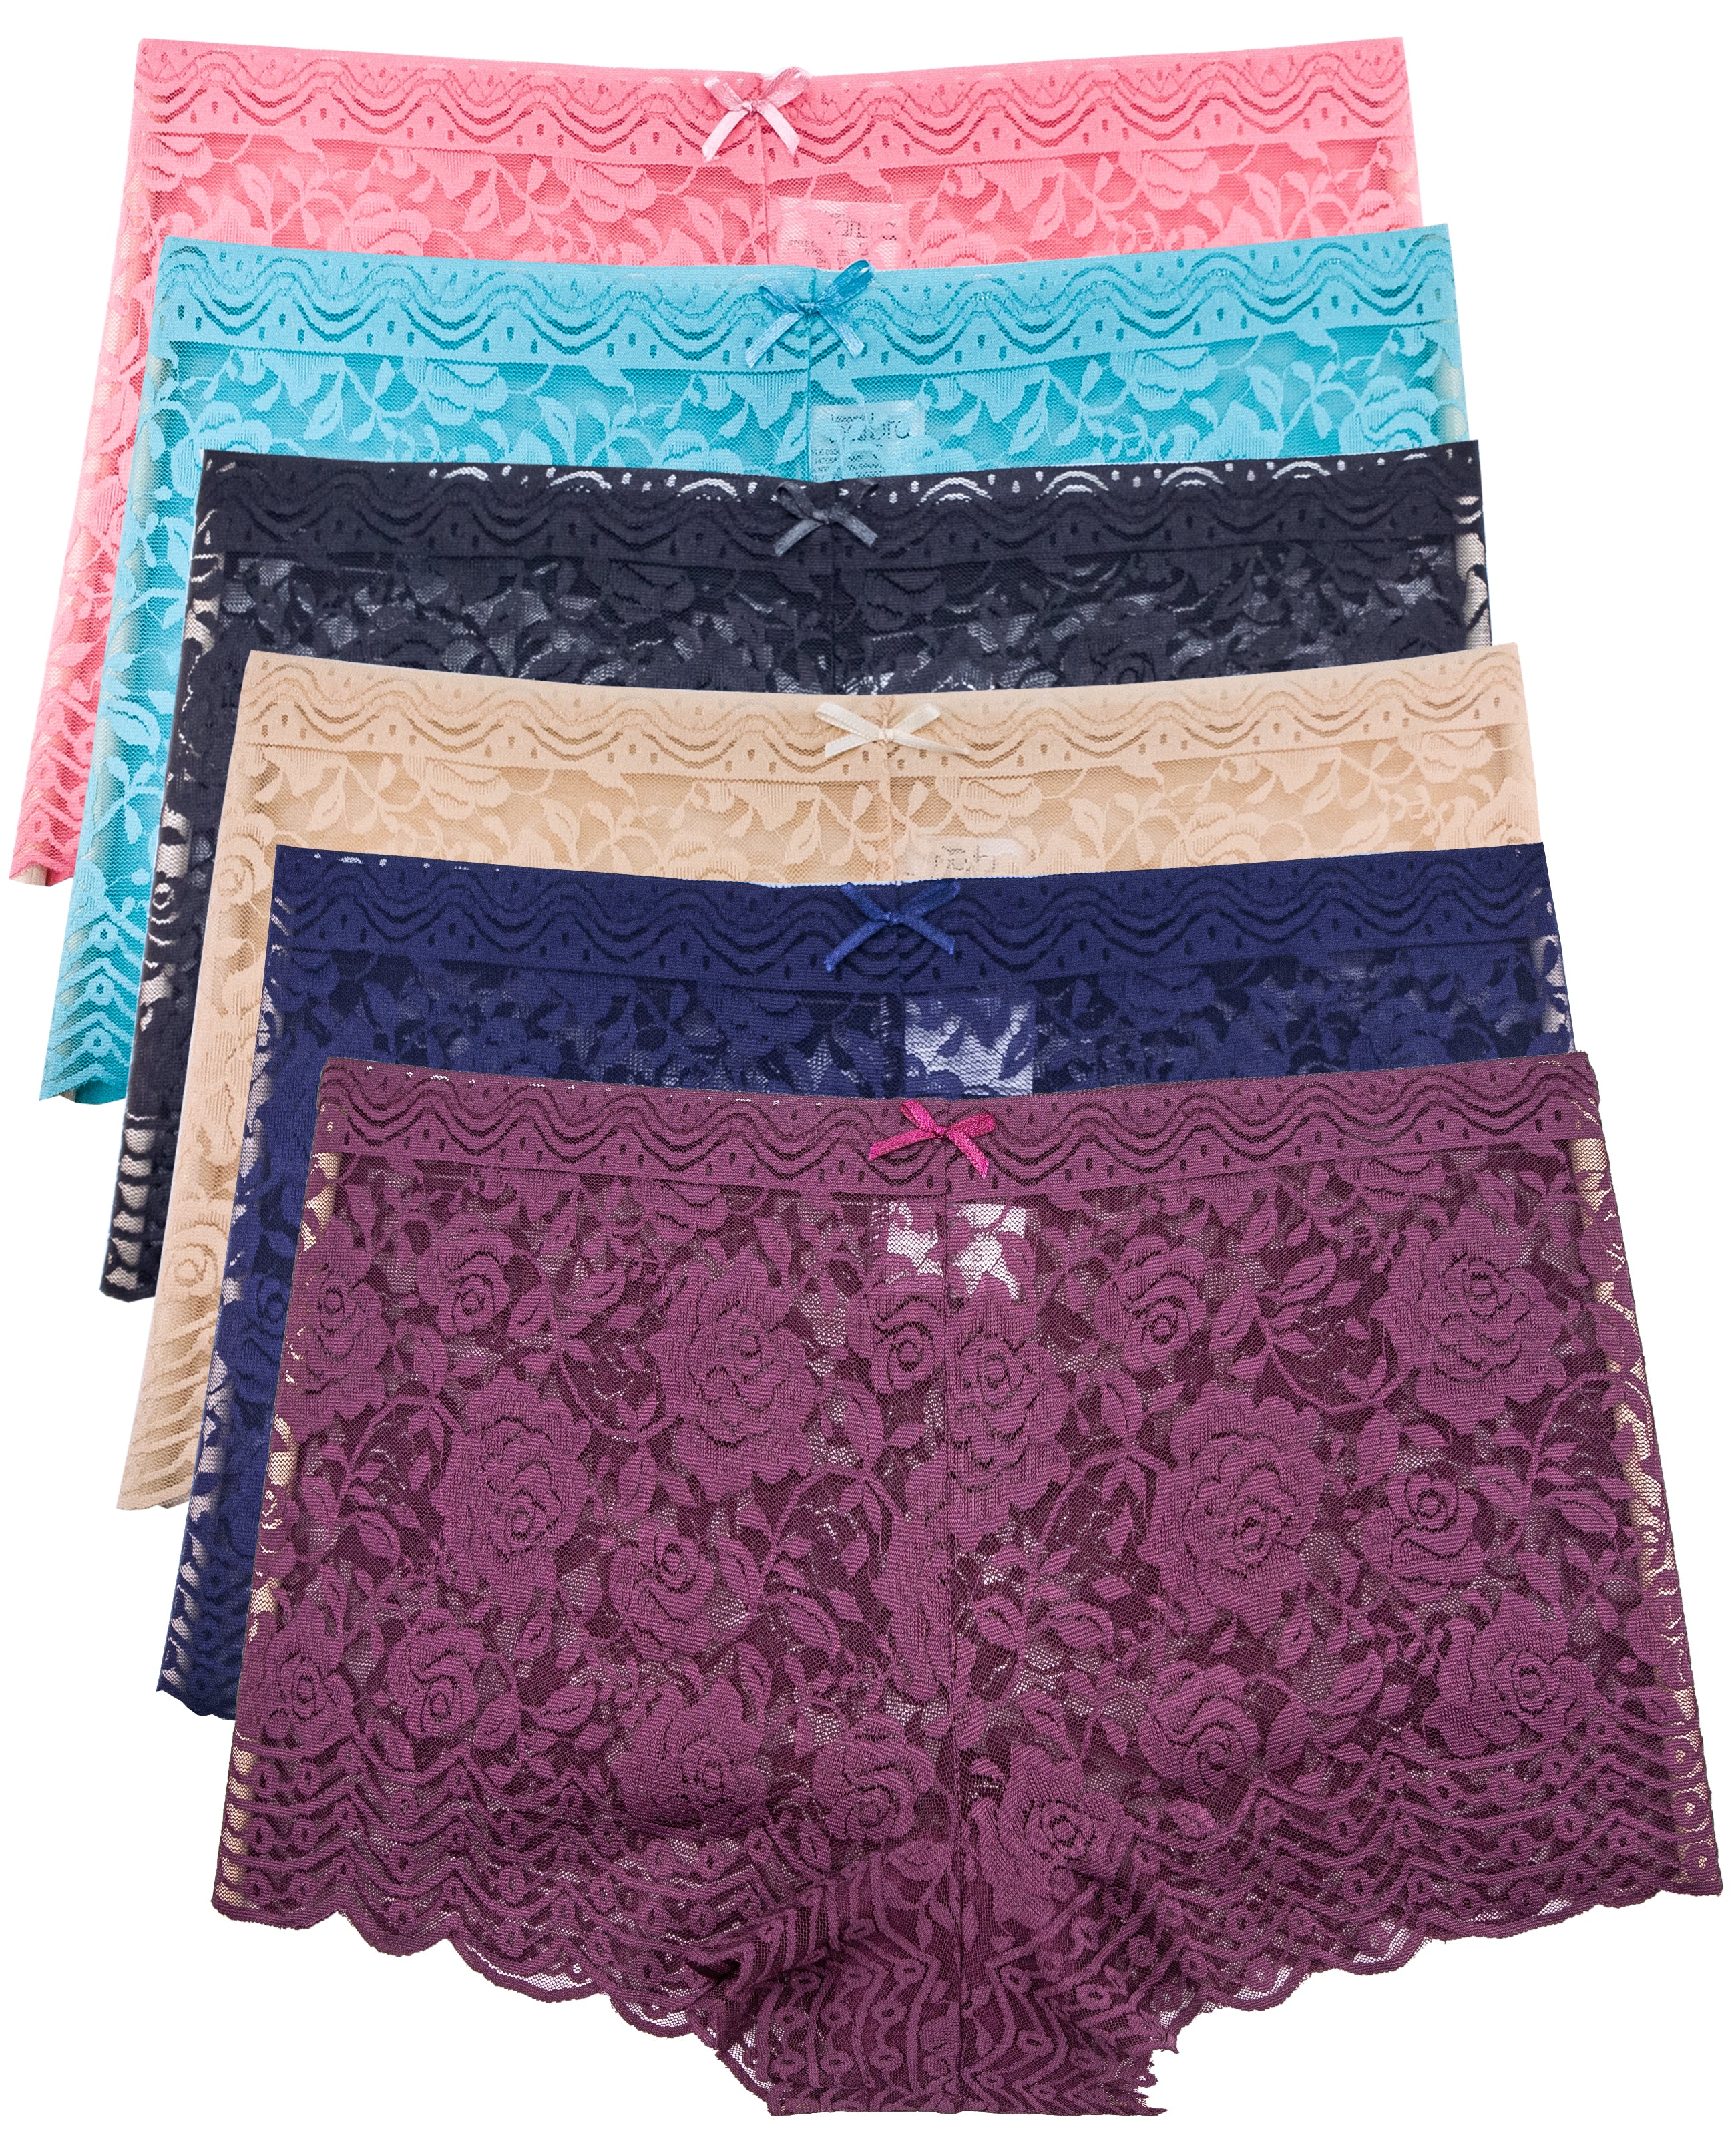 Lace Panties for Women Retro Lace Boyshort Underwear Small-Plus Size  Multi-Pack